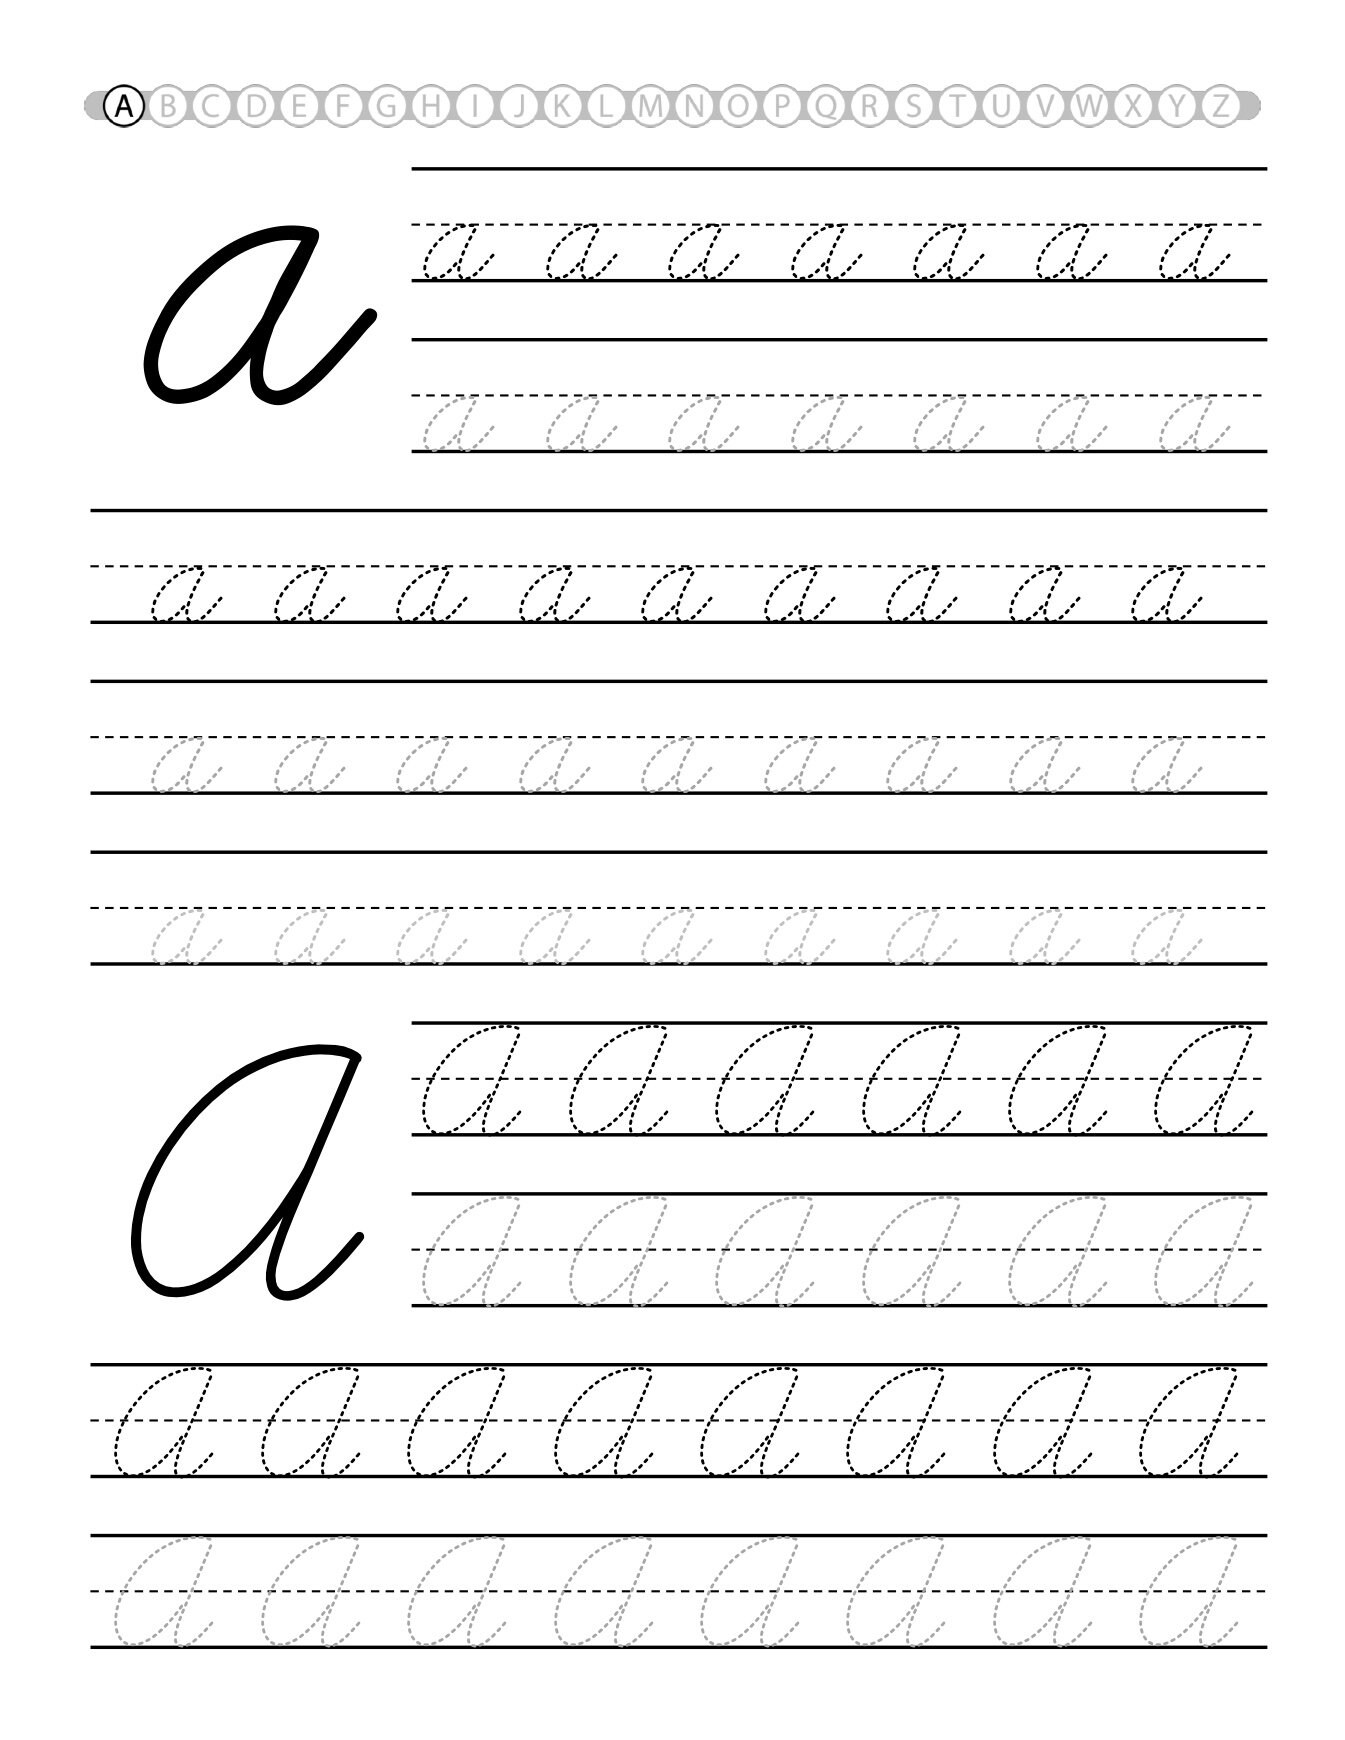 Cursive Handwriting Book - DIGITAL COPY